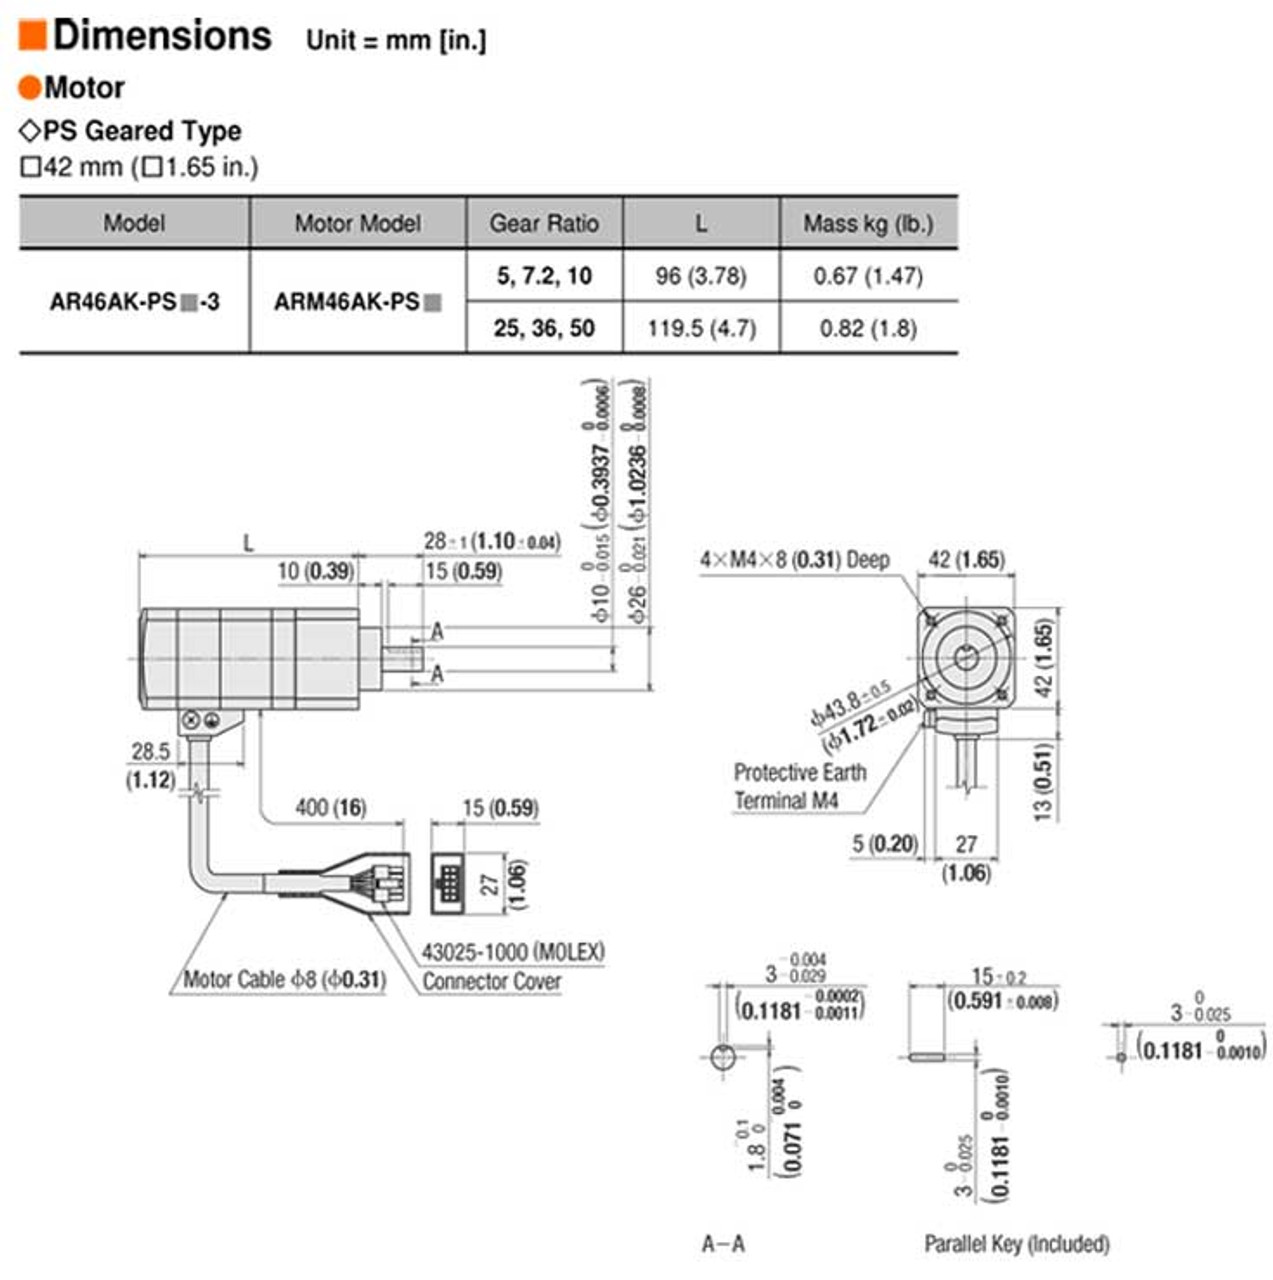 AR46AK-PS10-3 - Dimensions